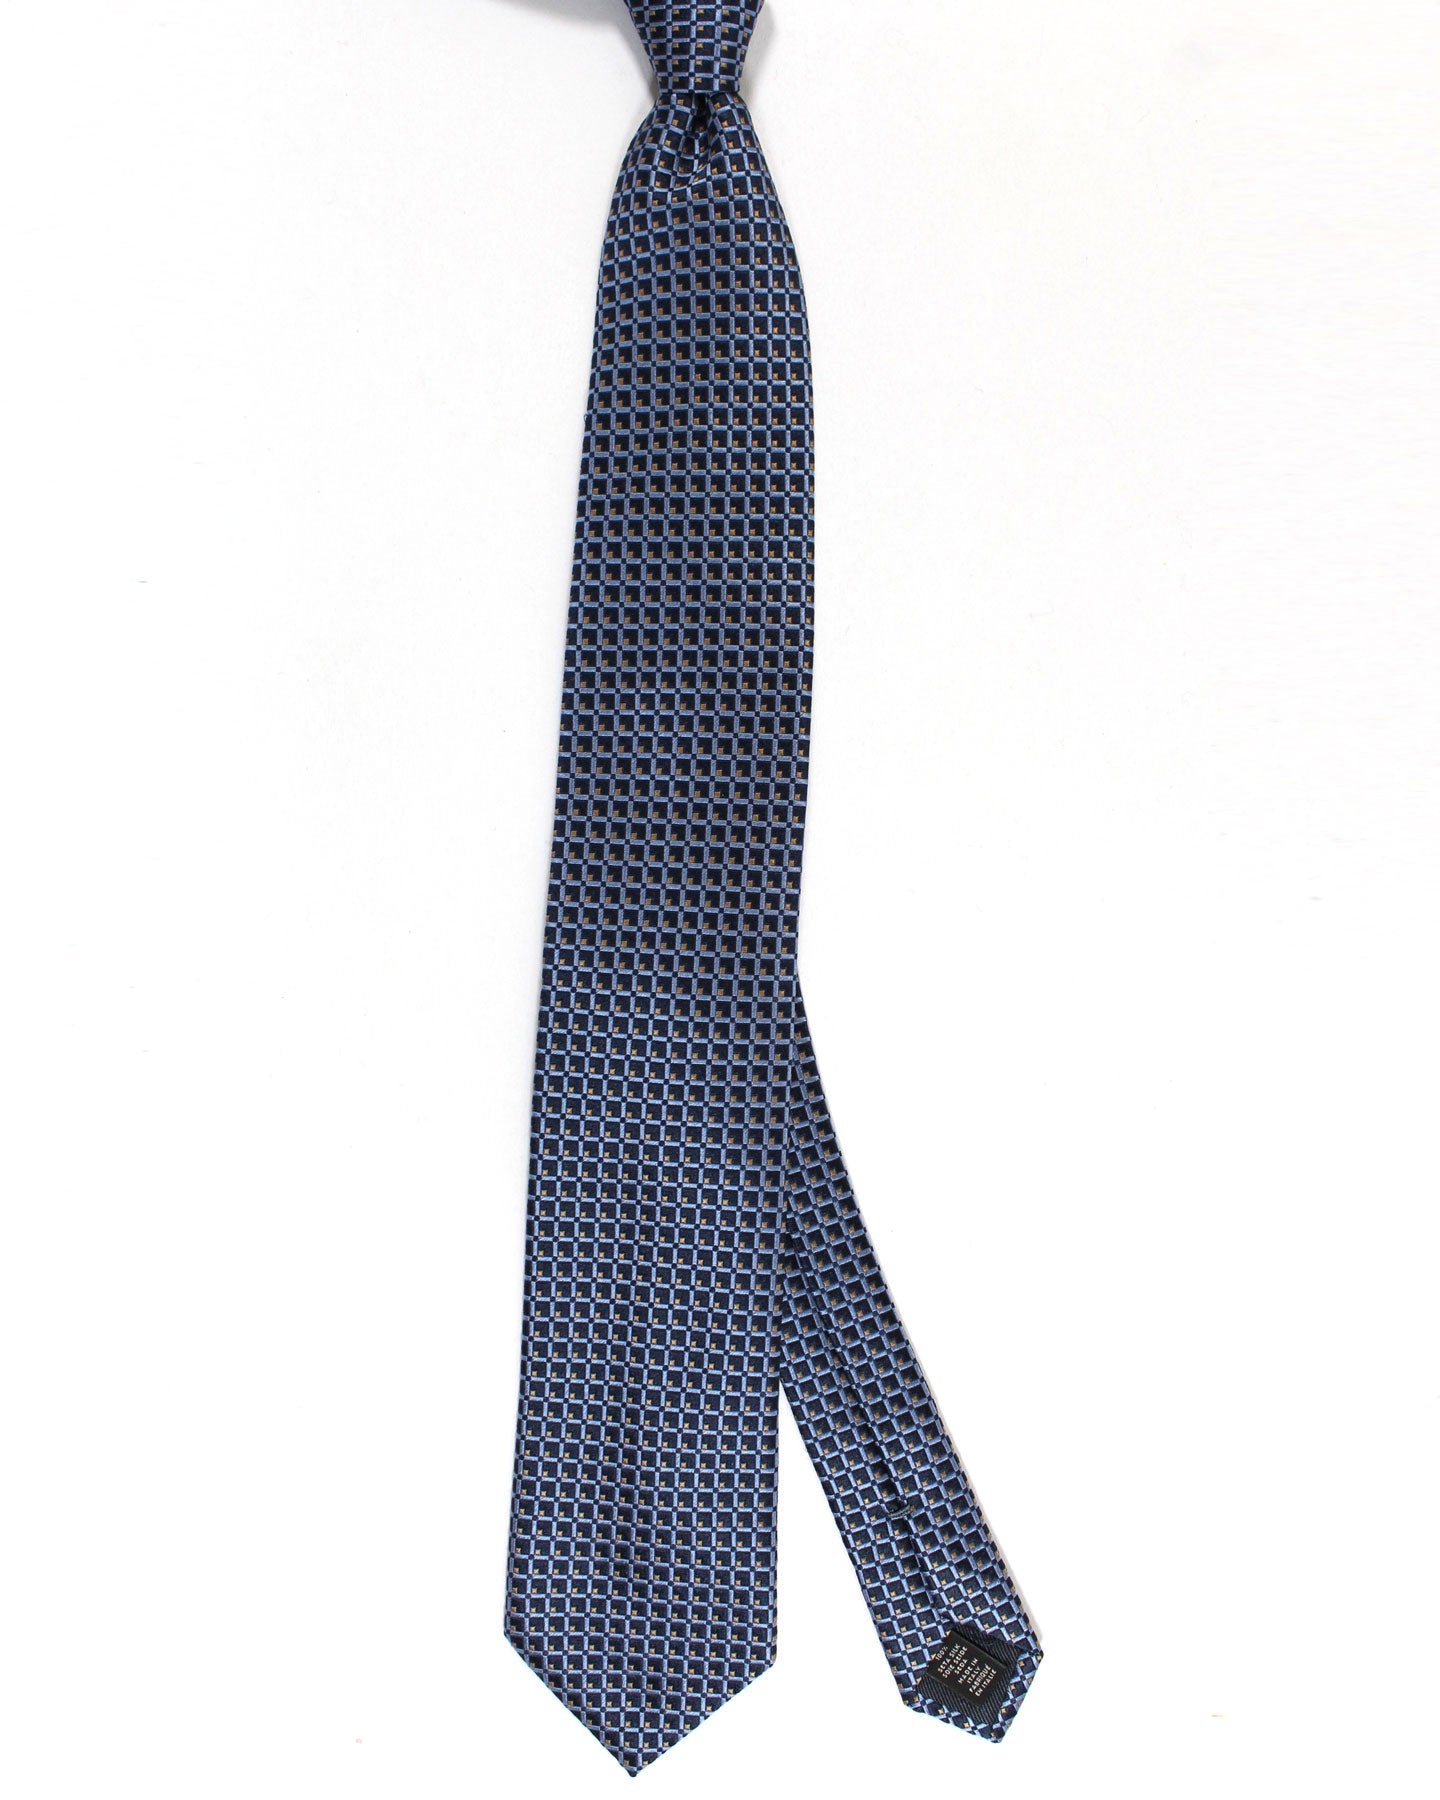 Ermenegildo Zegna Silk Tie Navy Blue Taupe Geometric - Hand Made in Italy